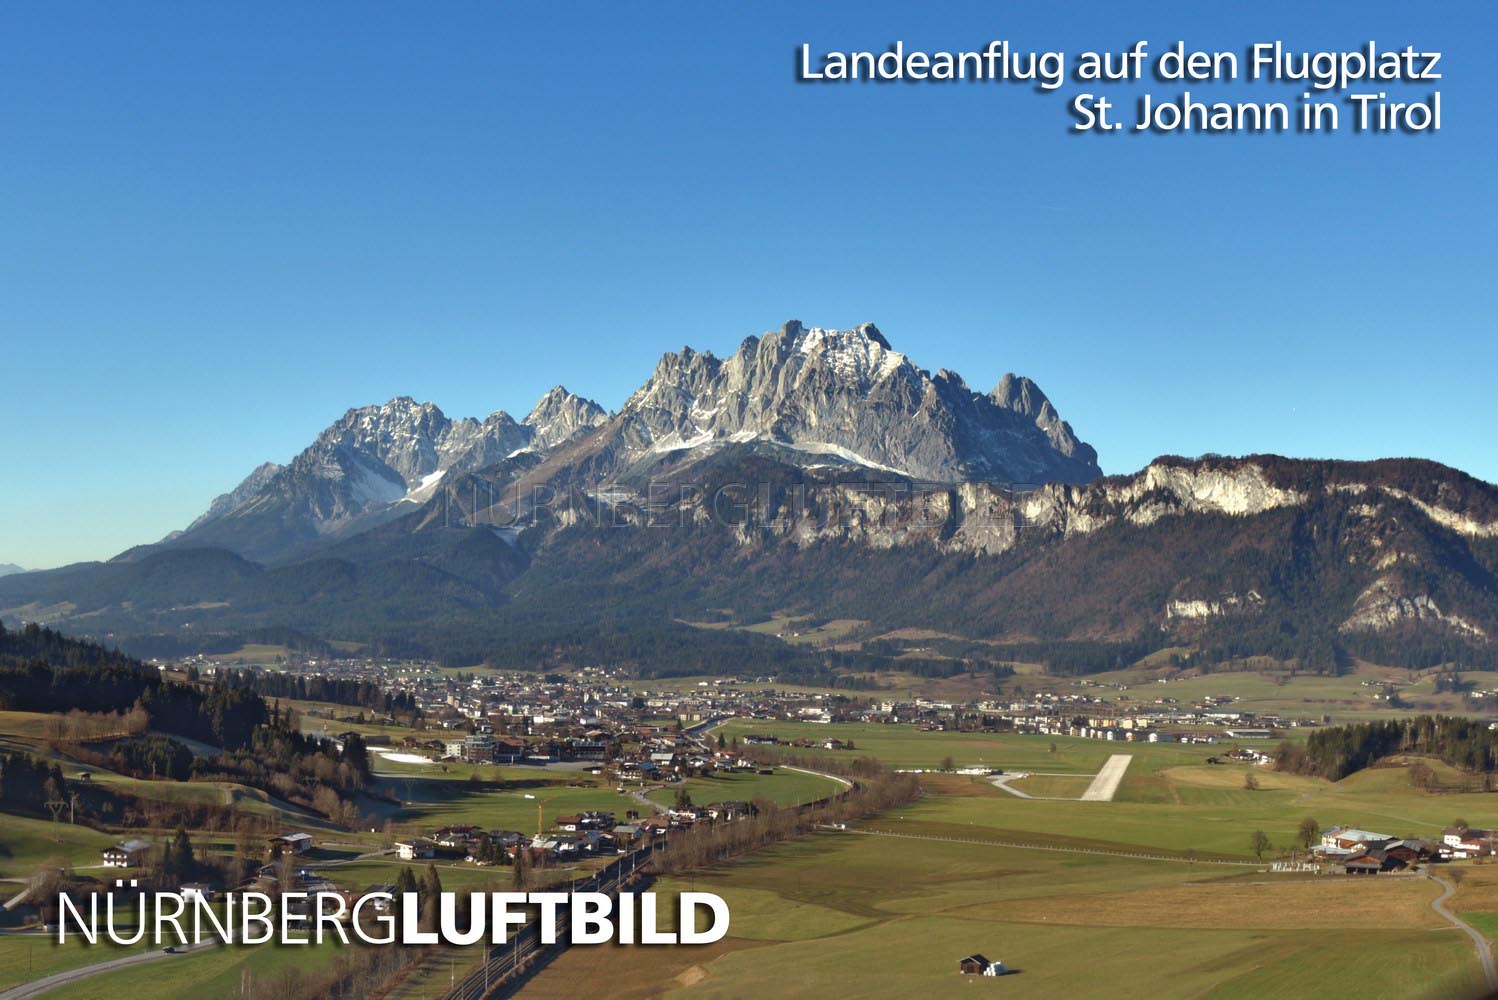 Landeanflug auf den Flugplatz St. Johann in Tirol, Luftbild